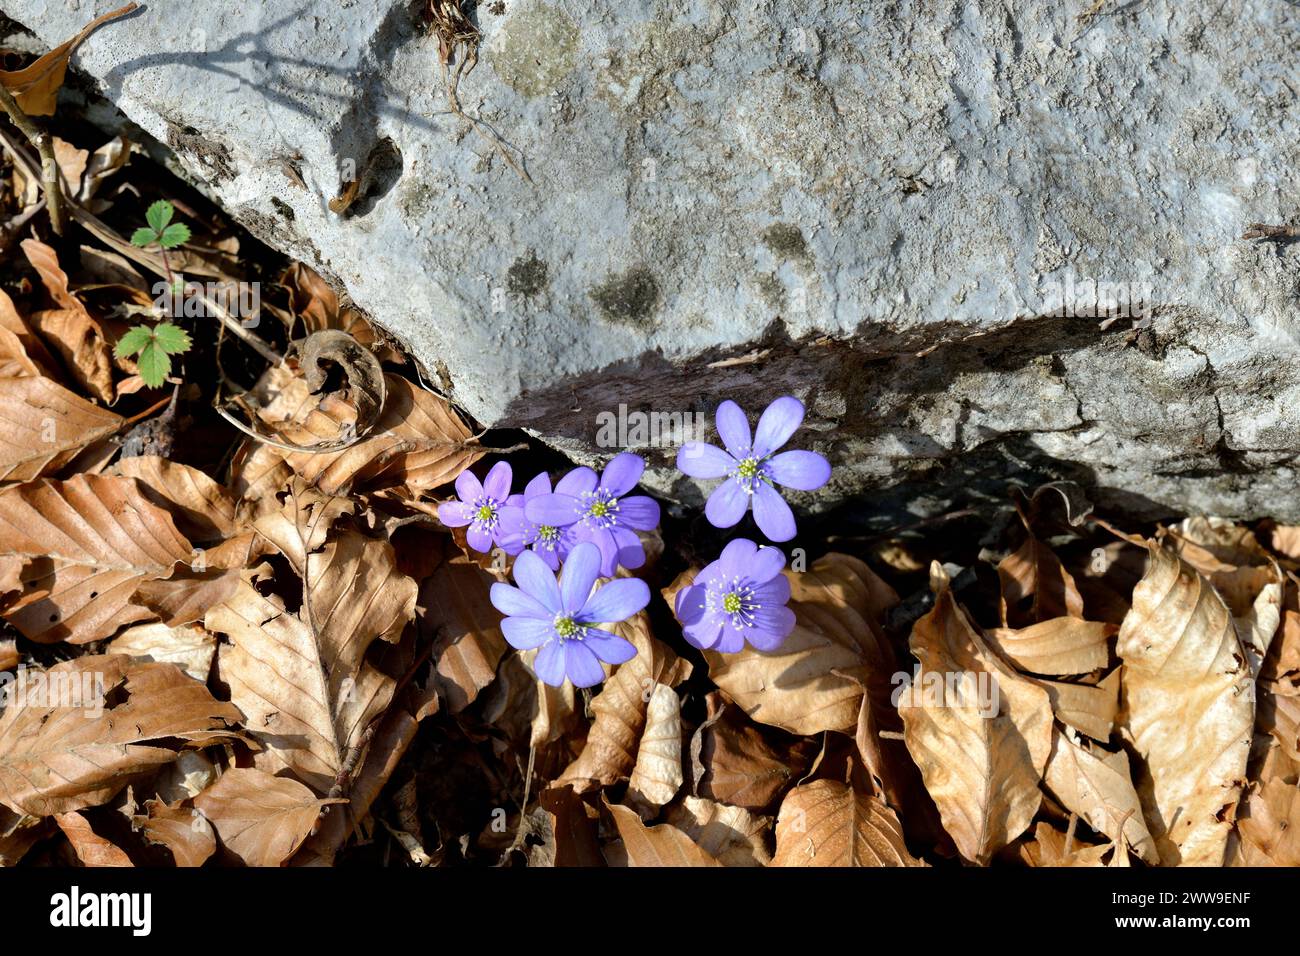 Common hepatica / Anemone hepatica flower grown between a rock and dry leaves Stock Photo